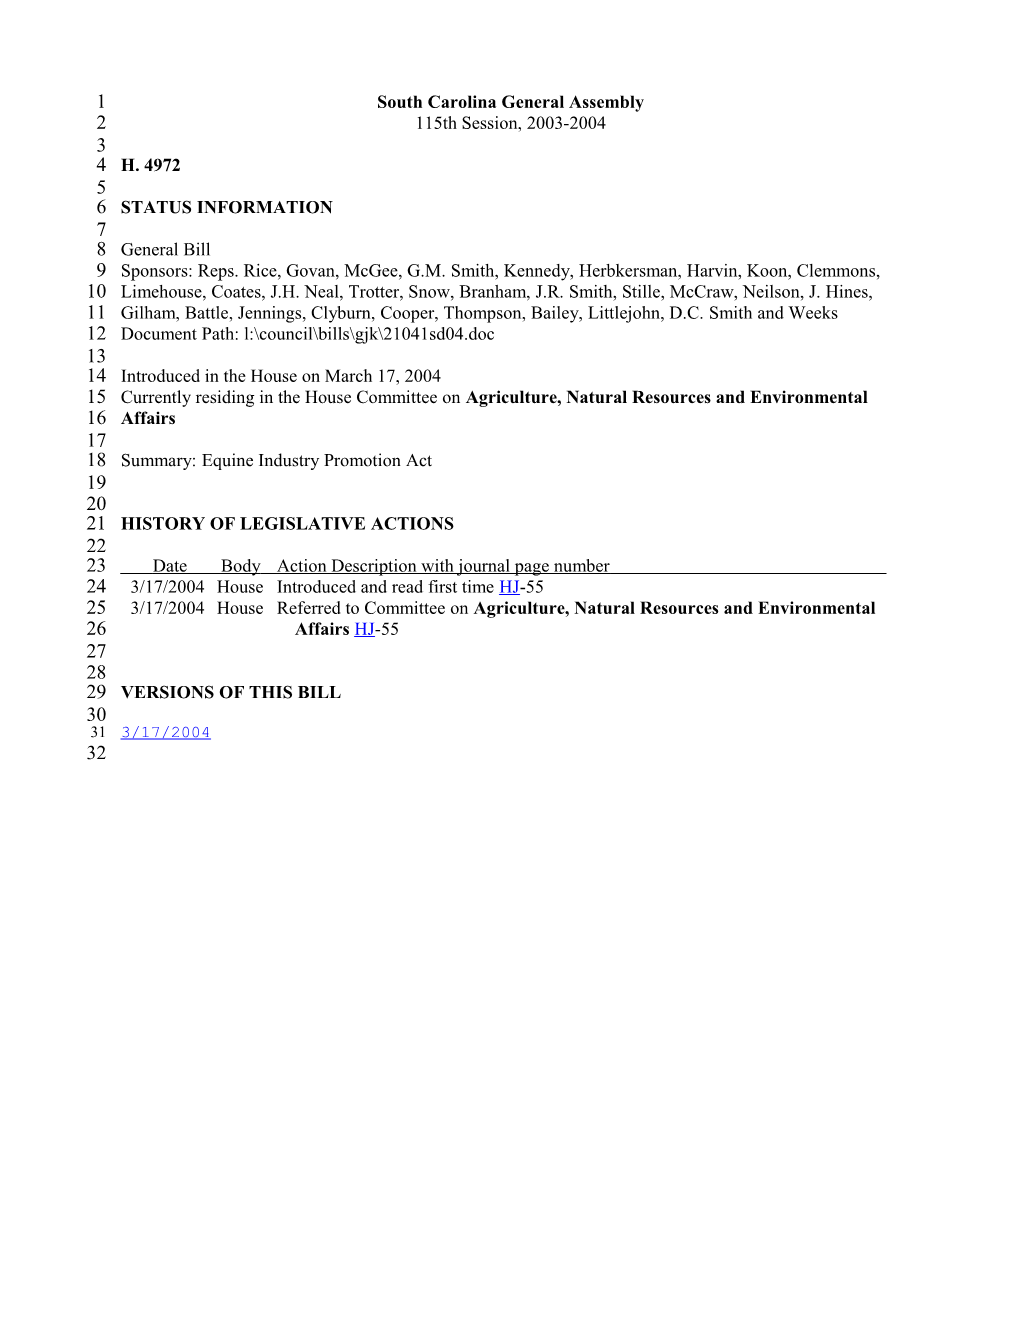 2003-2004 Bill 4972: Equine Industry Promotion Act - South Carolina Legislature Online